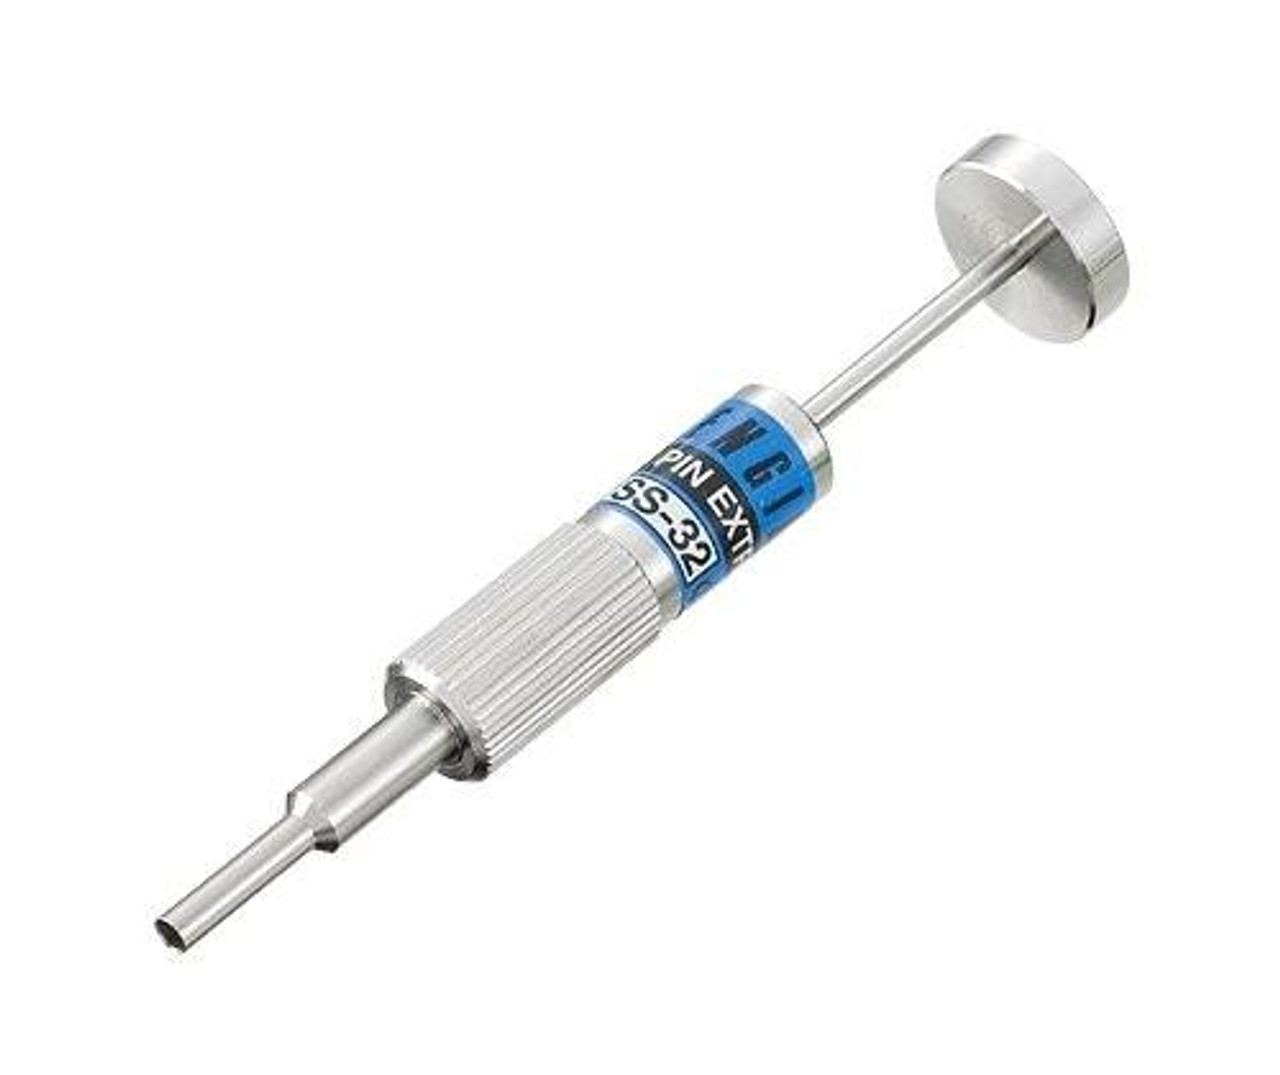 Vertical Power Pin Extractor Tool - Steinair Inc.